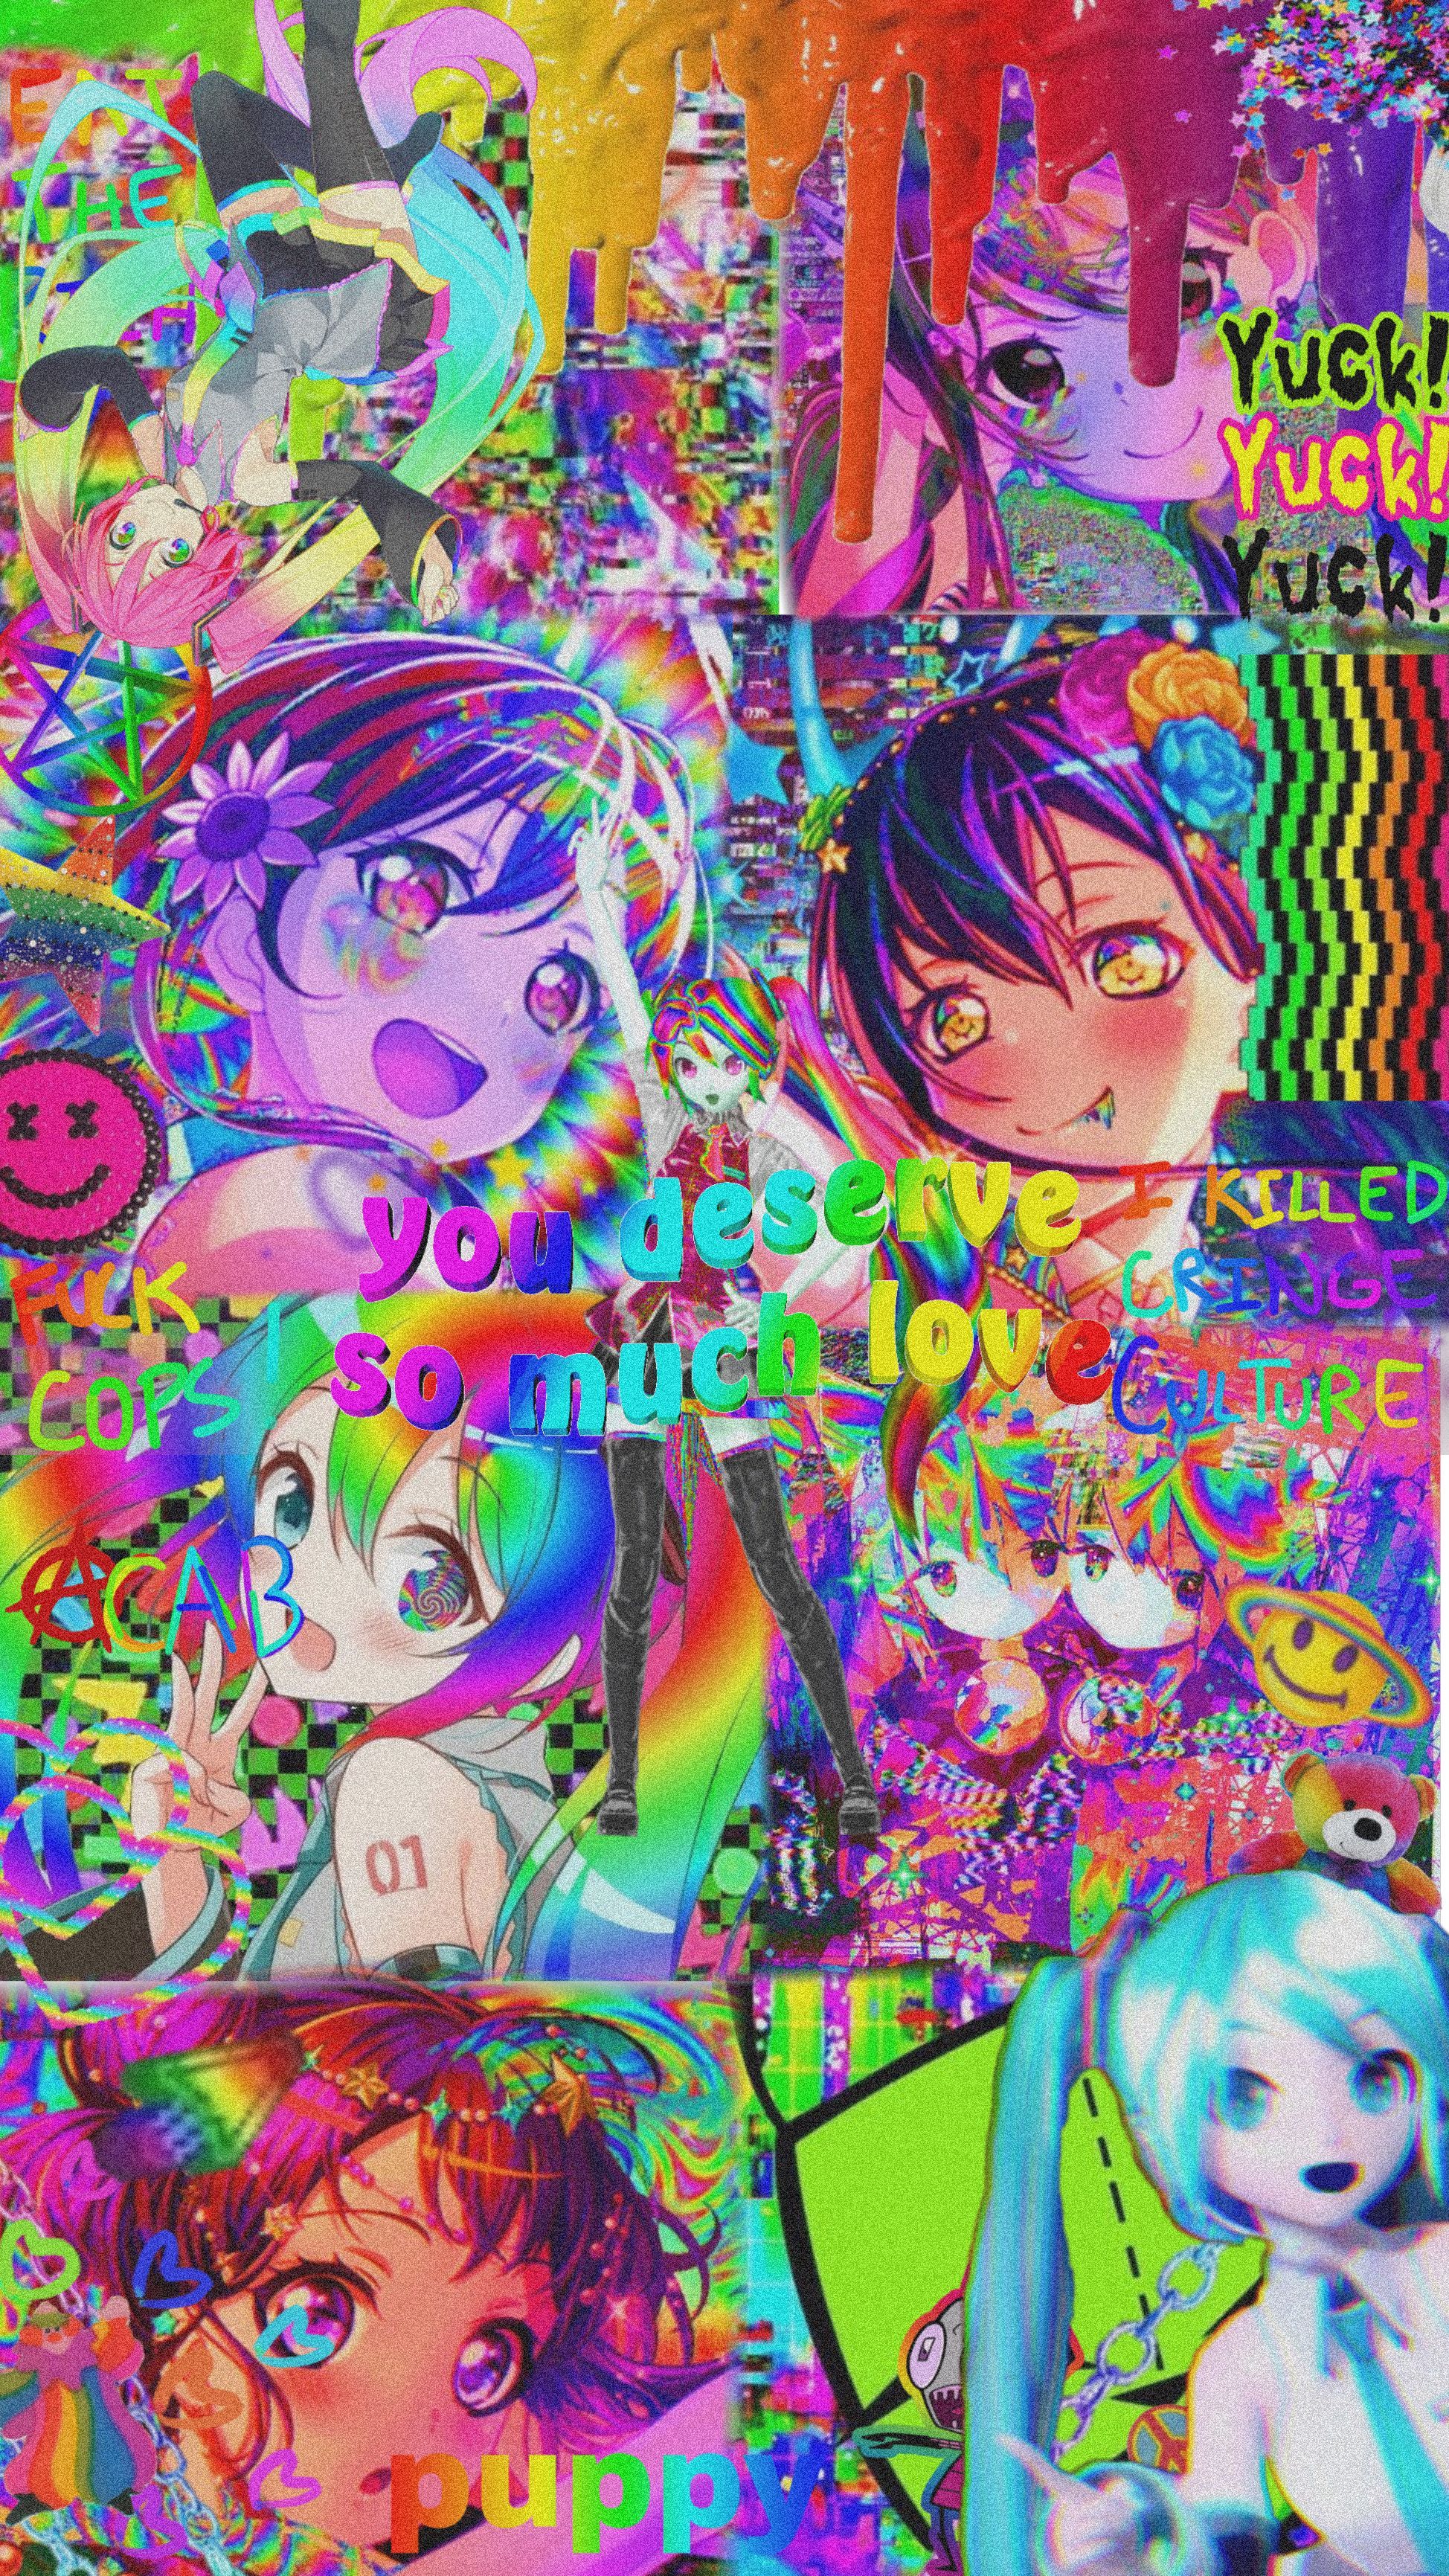 Aesthetic wallpaper I made for my phone! - Clowncore, animecore, webcore, glitchcore